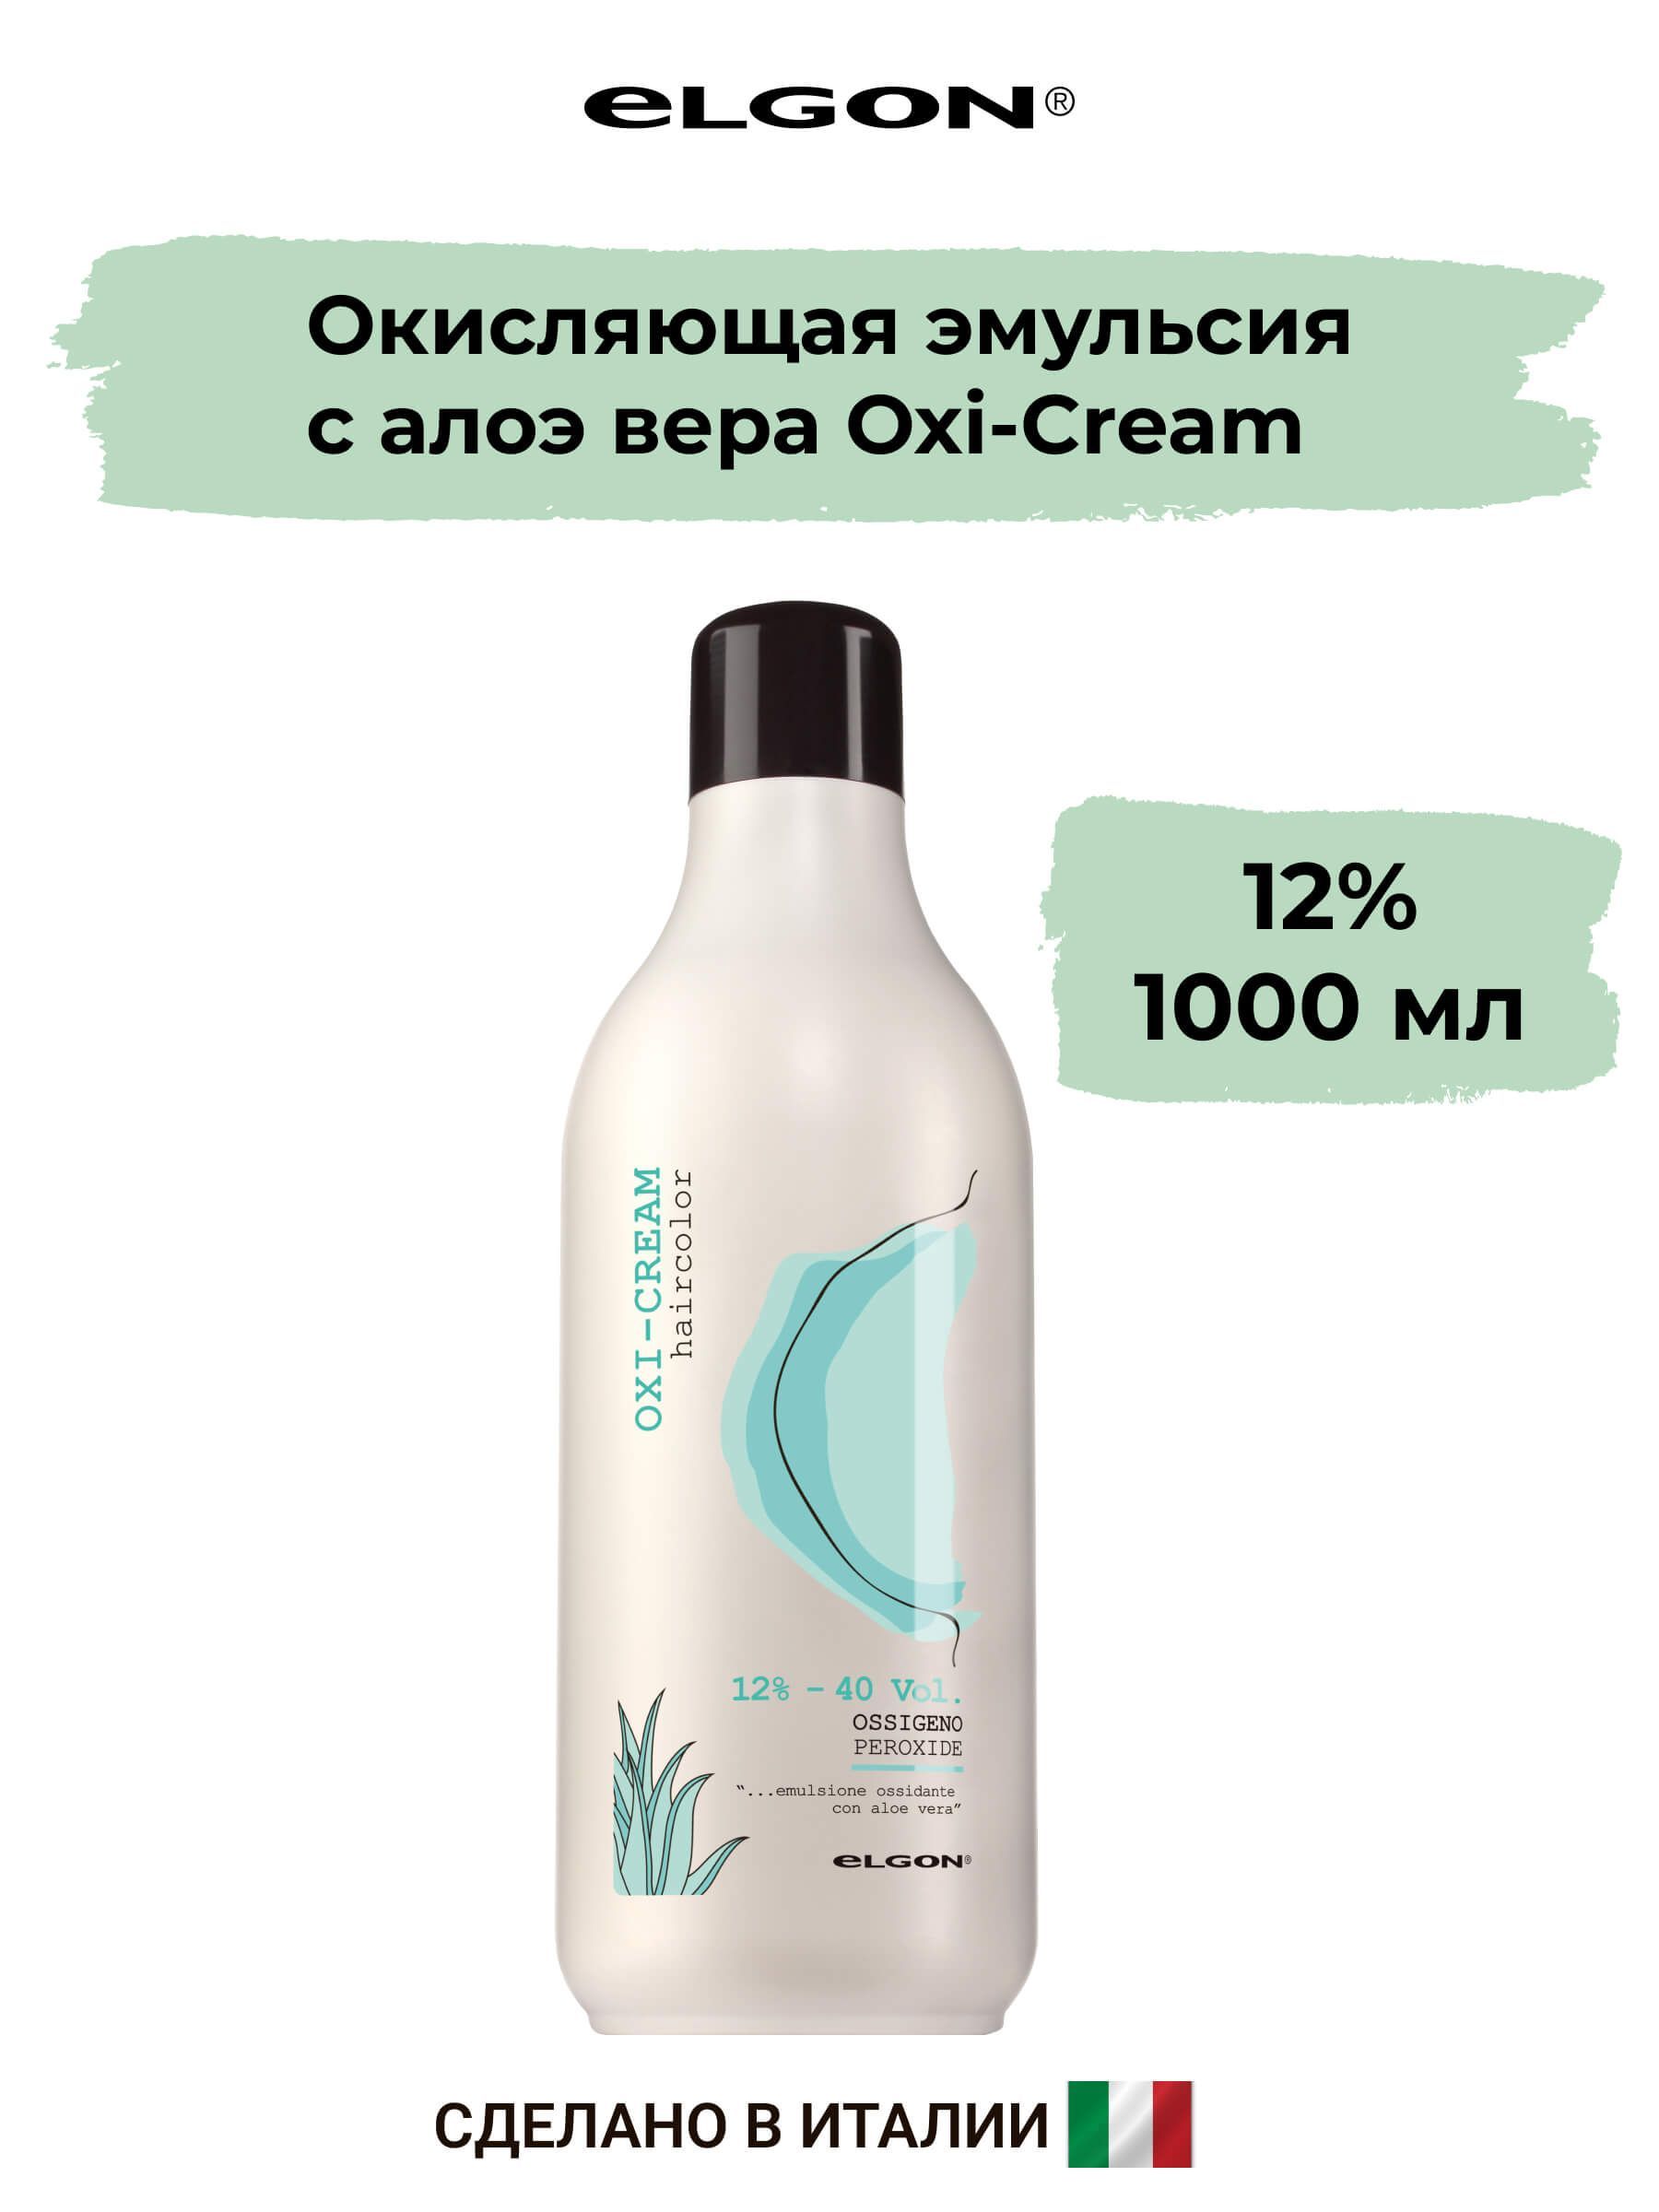 ElgonОкисляющаяэмульсиясалоэвераOxi-Cream12%,1000мл.